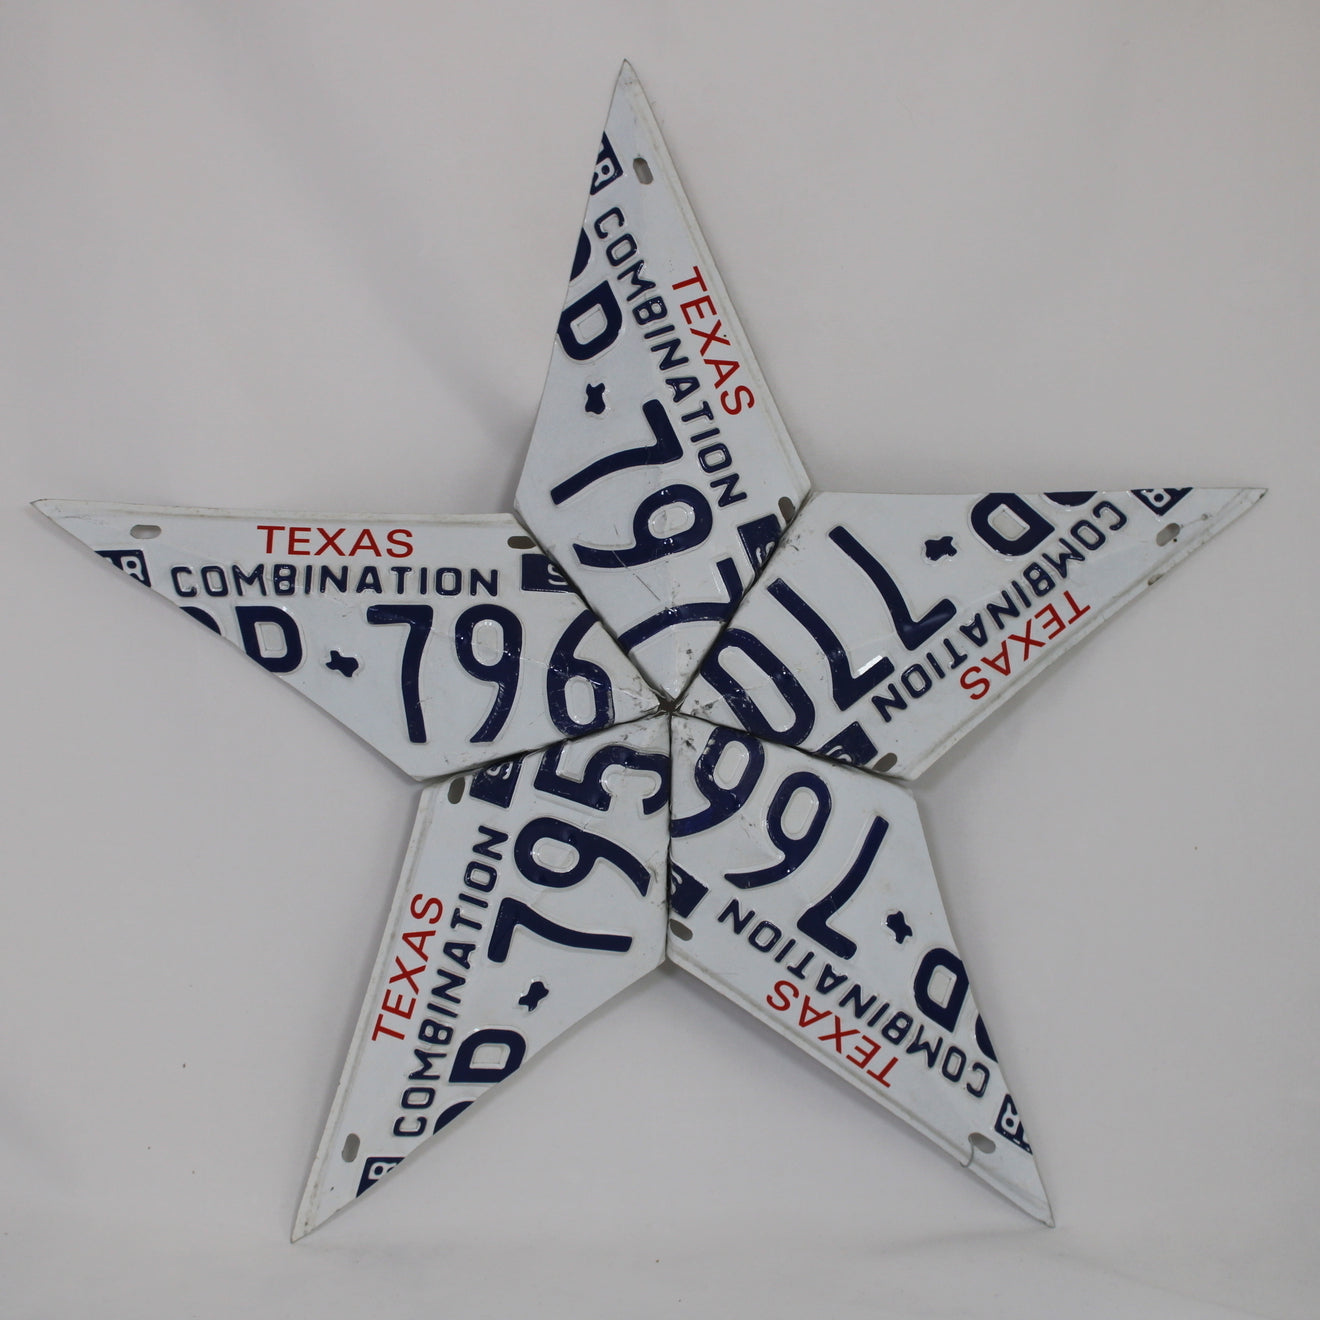 Texas License Plate Star